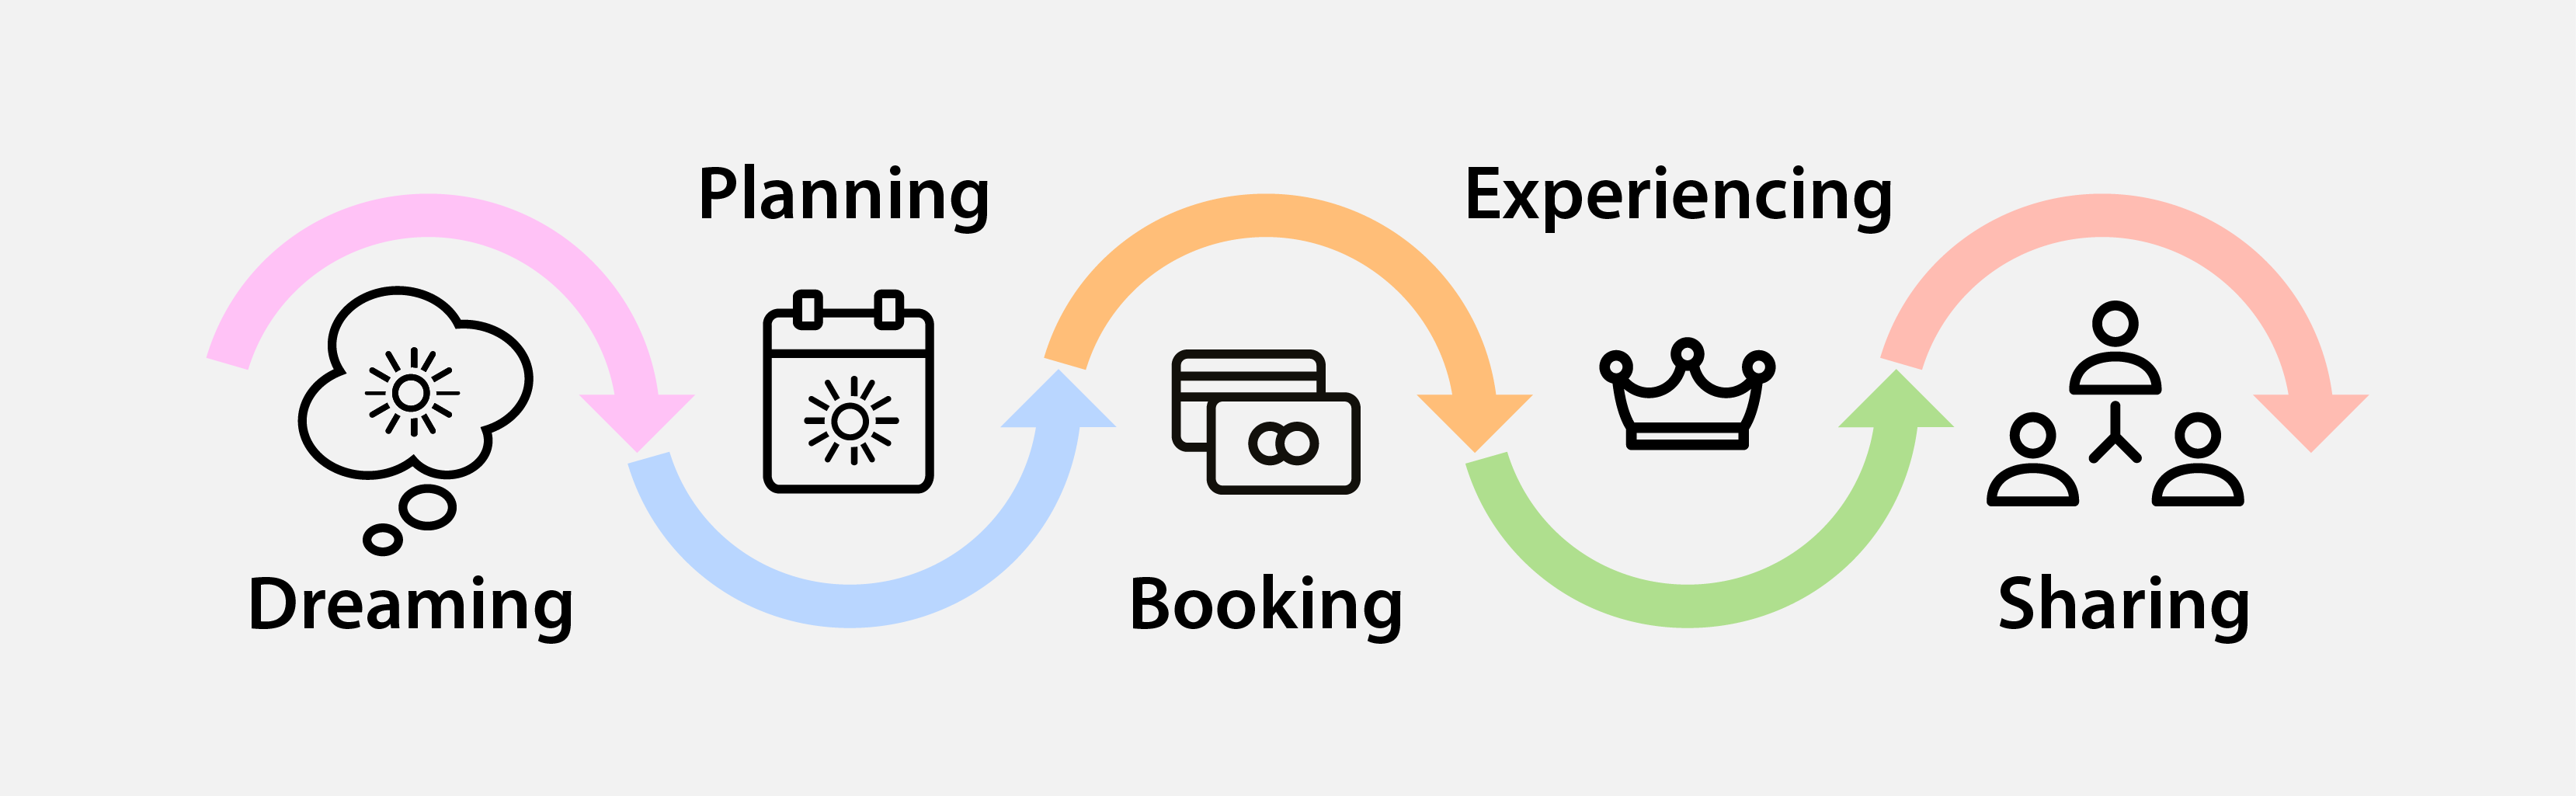 Destination marketing: the visitor's journey